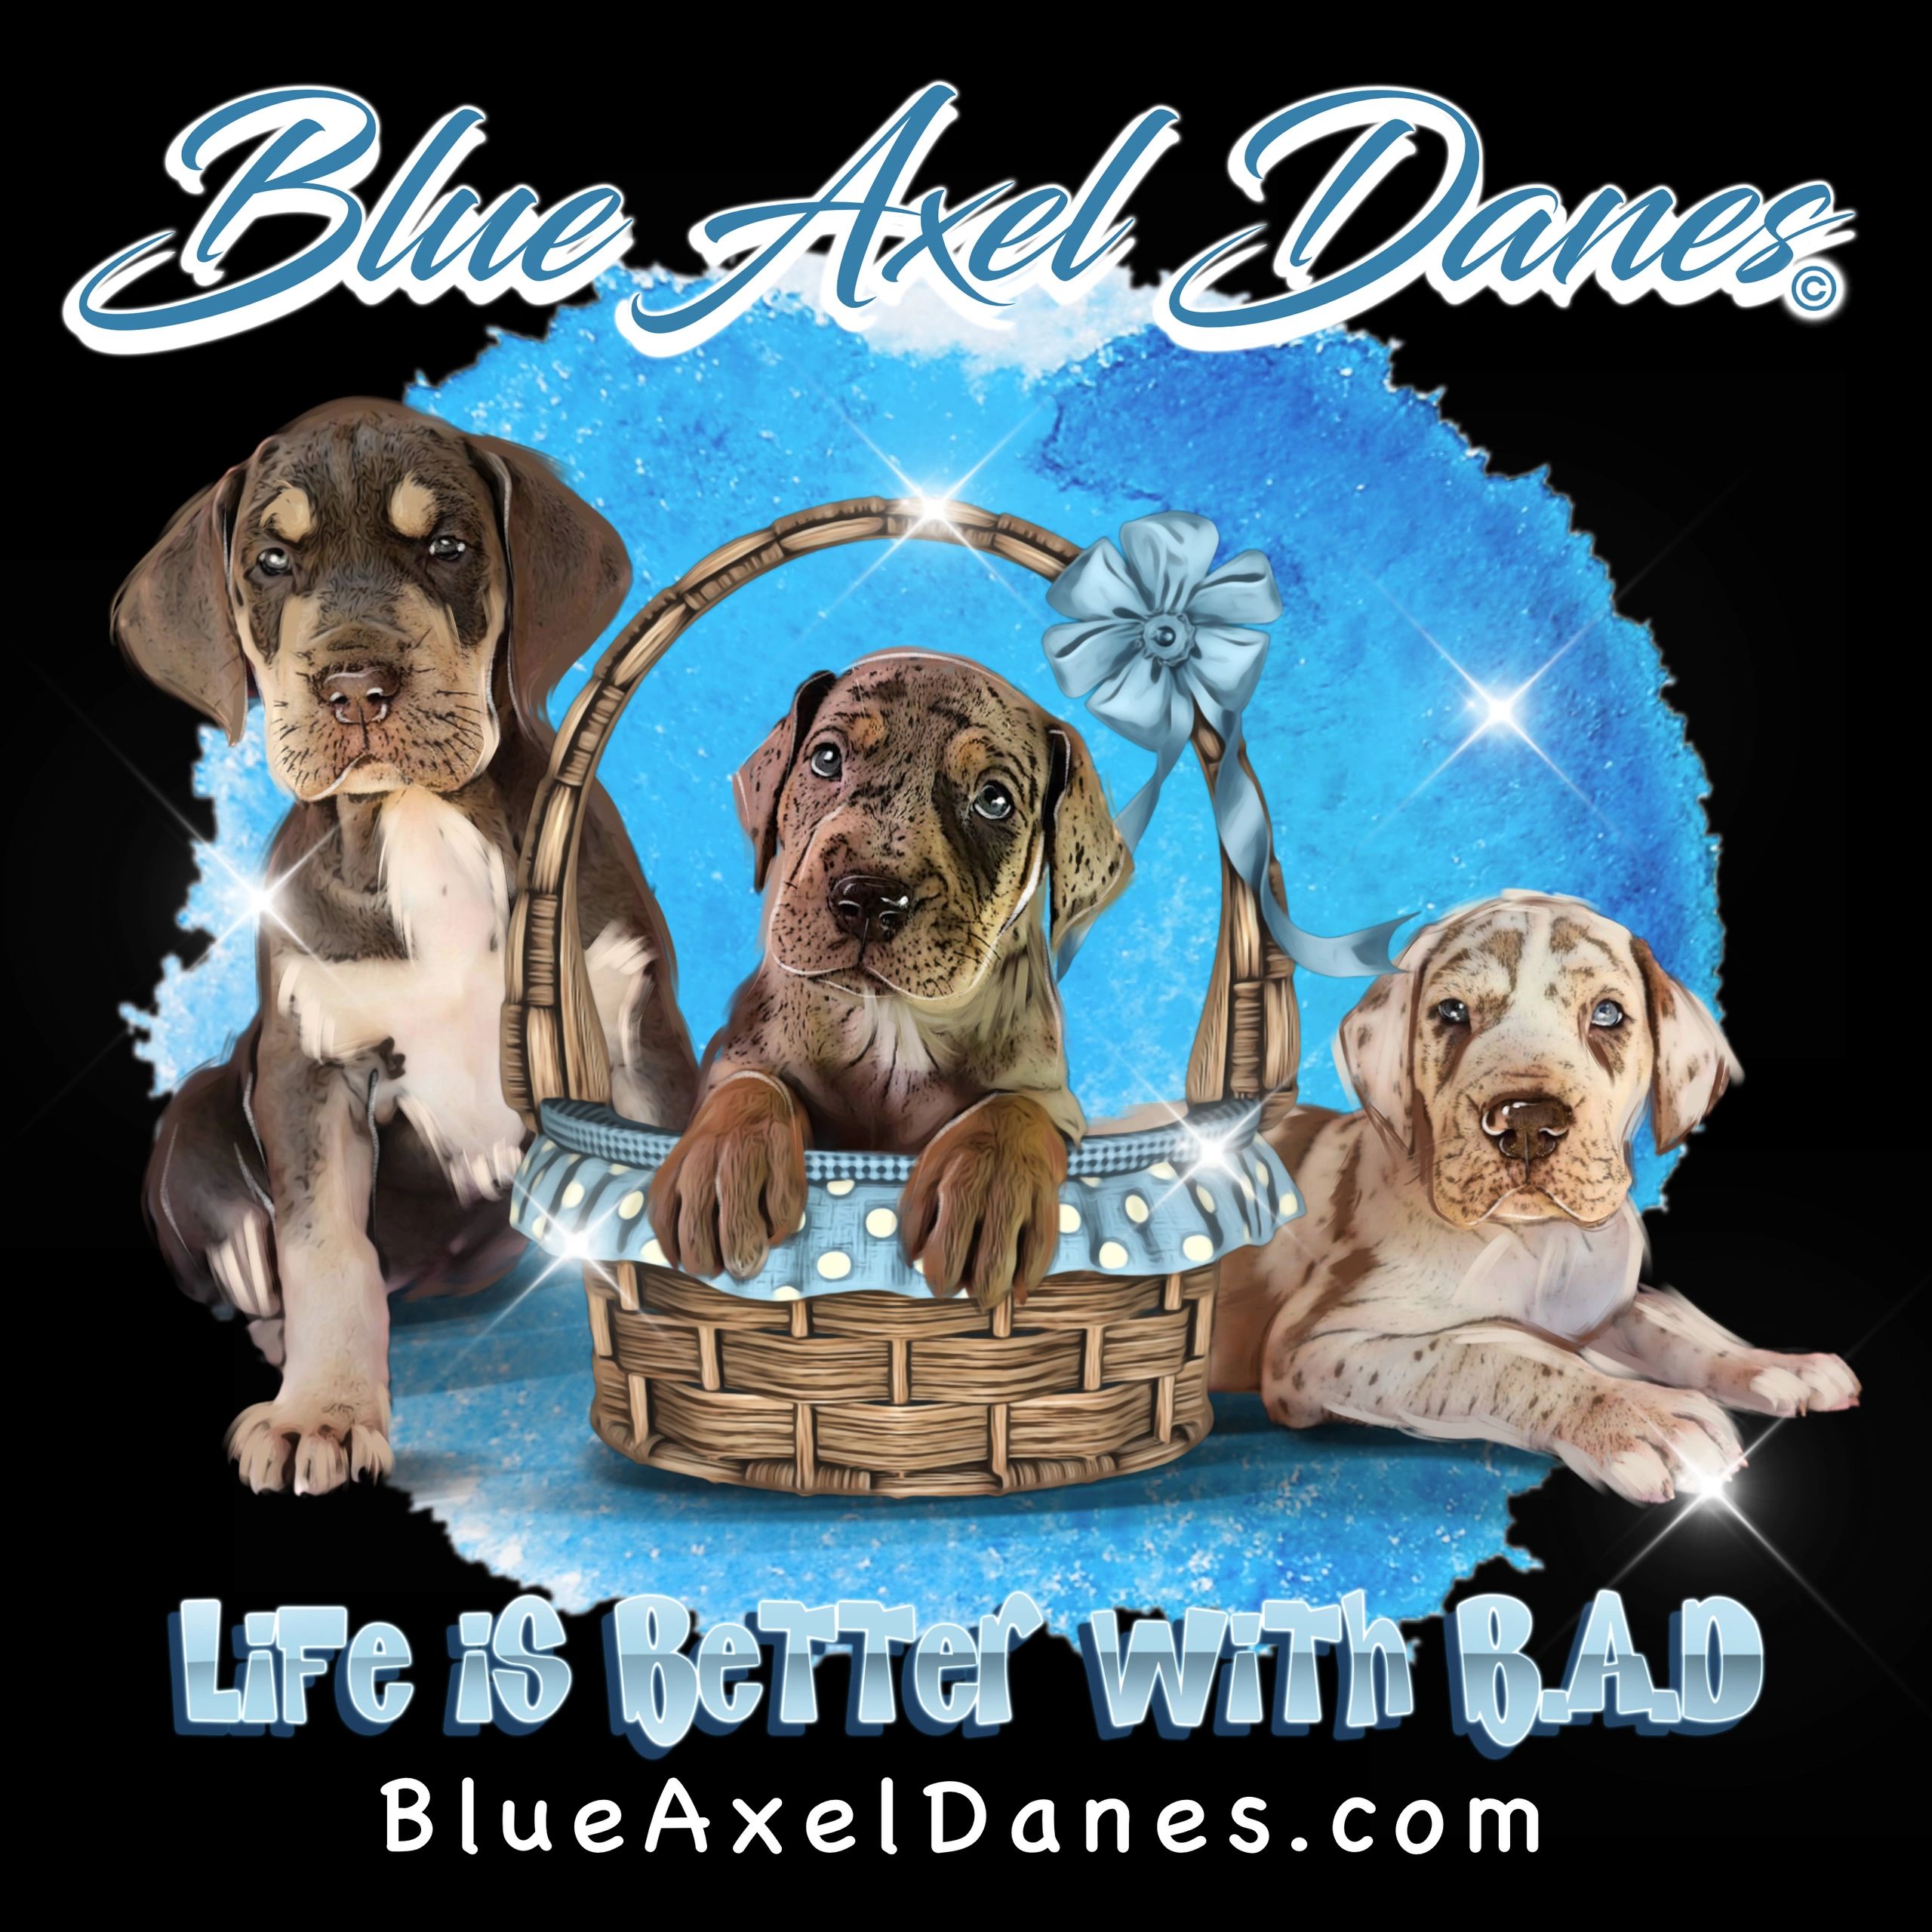 Blue Axel Danes logo
Blue great dane
Puppies
Blue puppies
Harlequin pup
Kentucky great dane pup